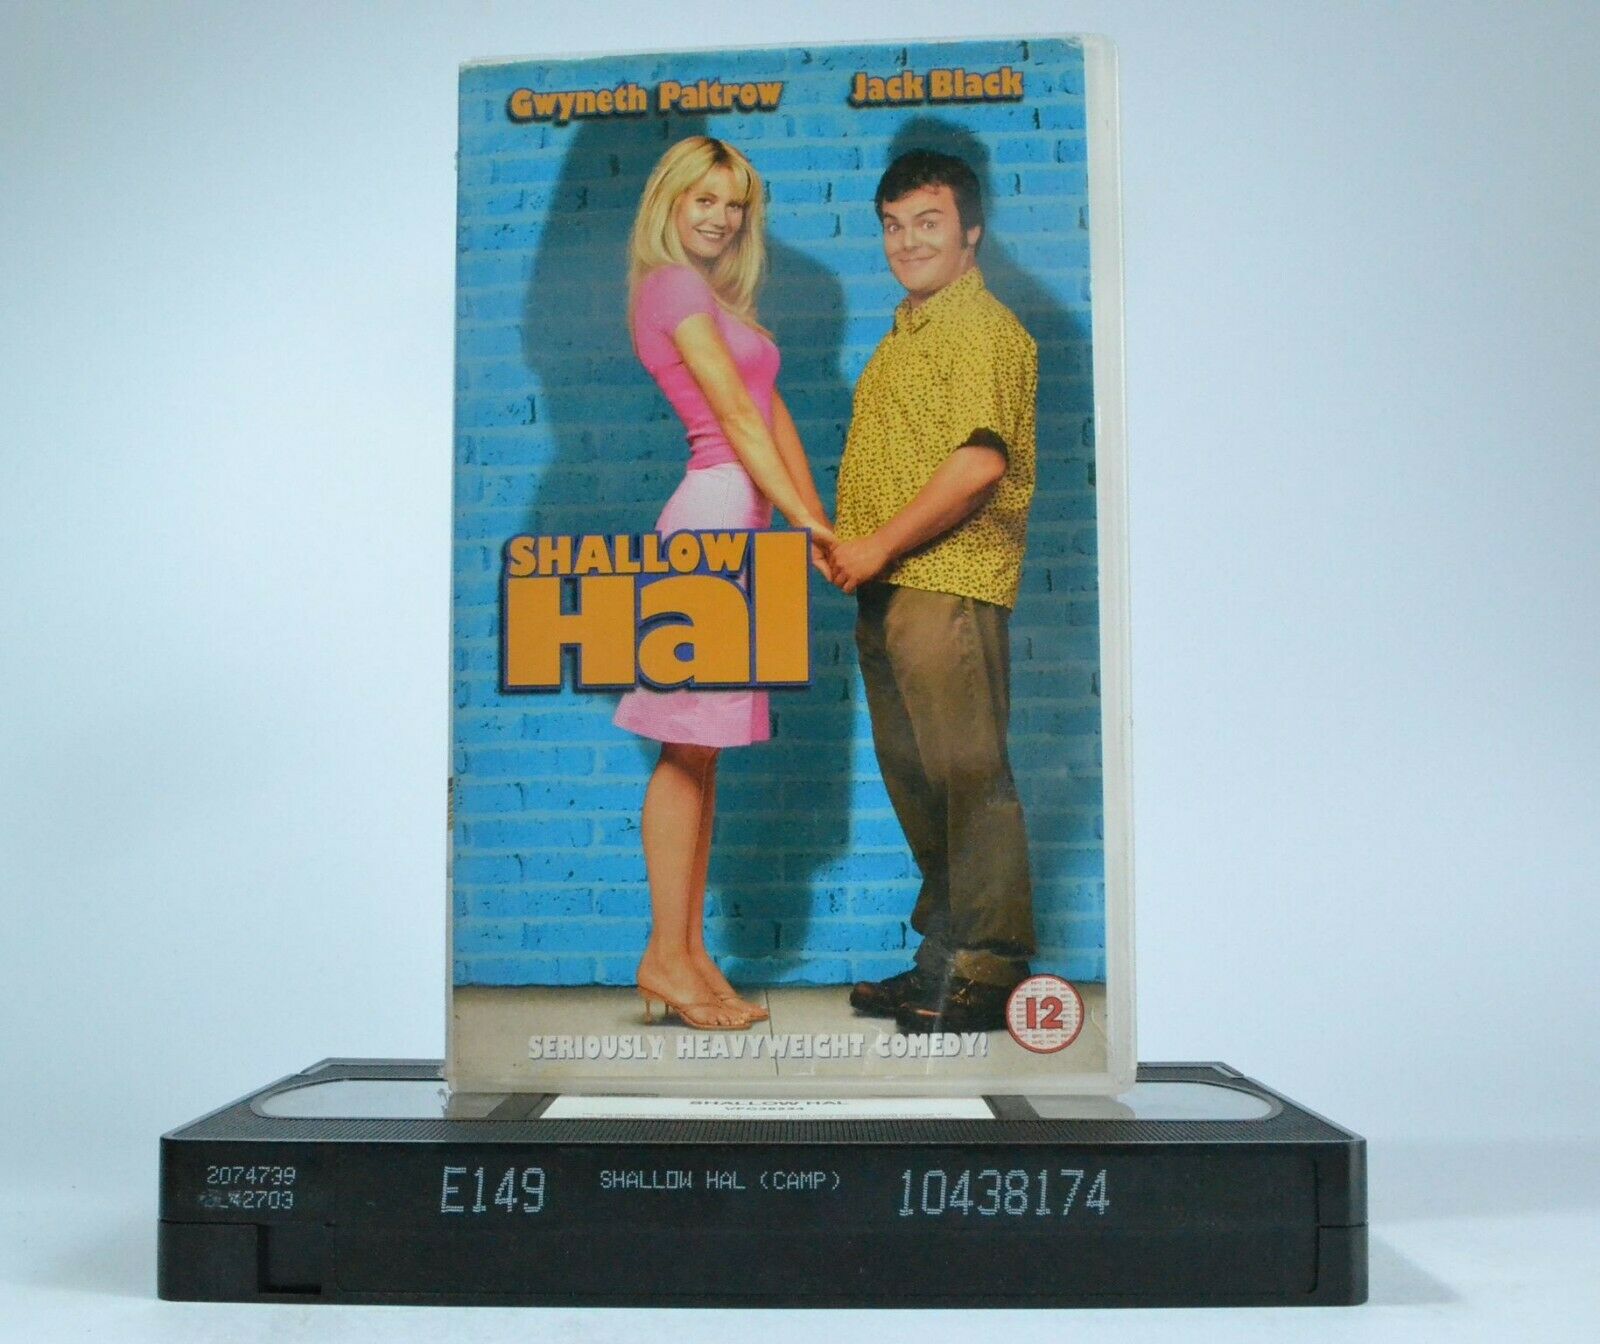 Shallow Hal (2001) - Romantic Comedy - Gwyneth Paltow/Jack Black - Pal VHS-